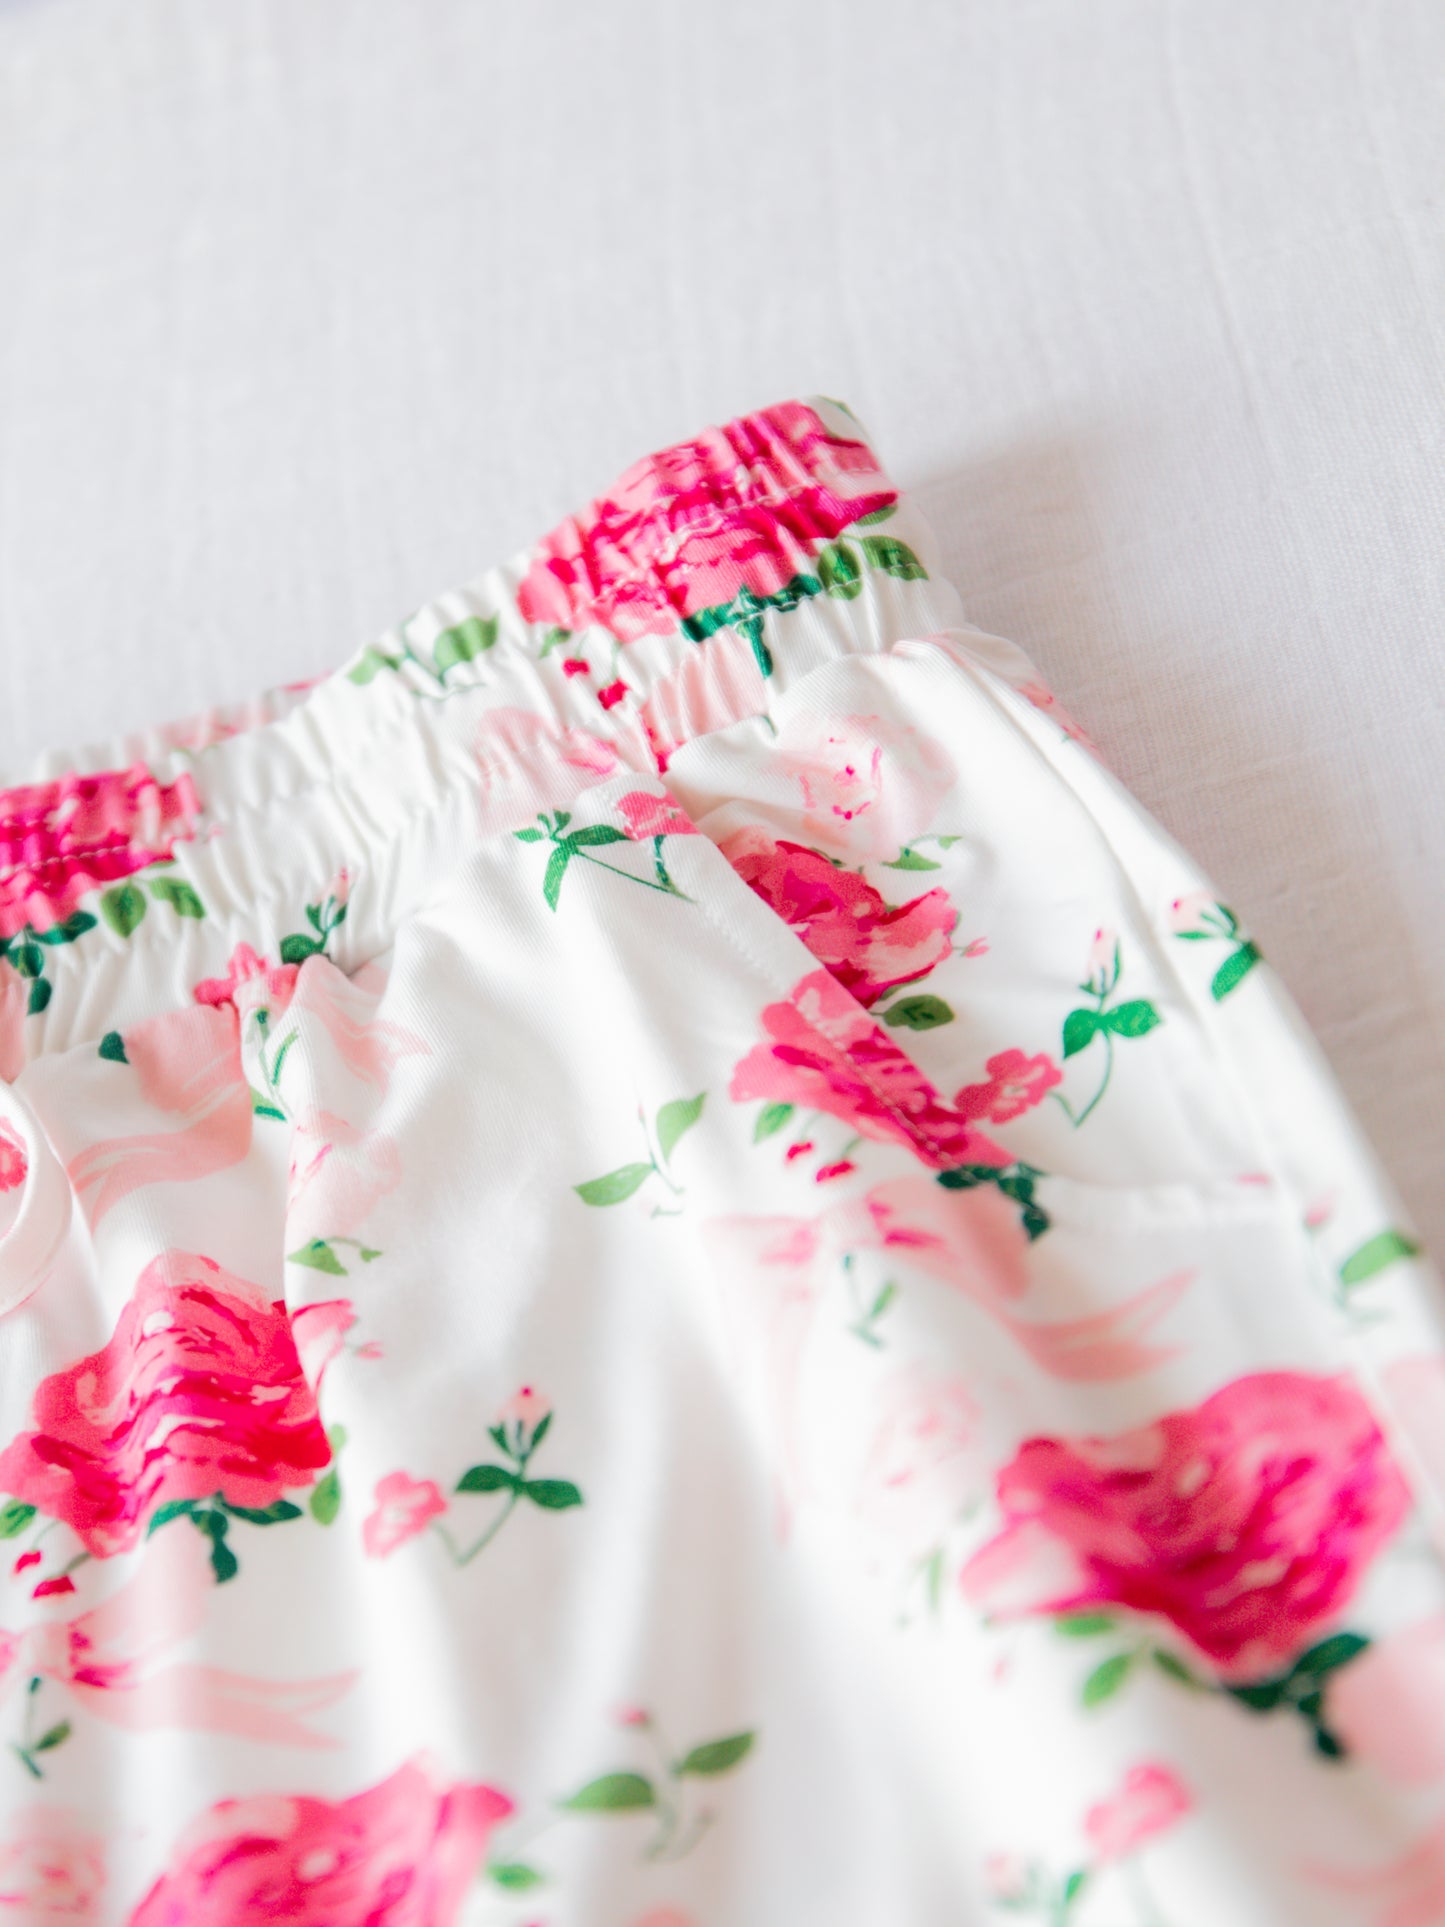 Women's Cloud Pajamas - Pink Rose Bouquet